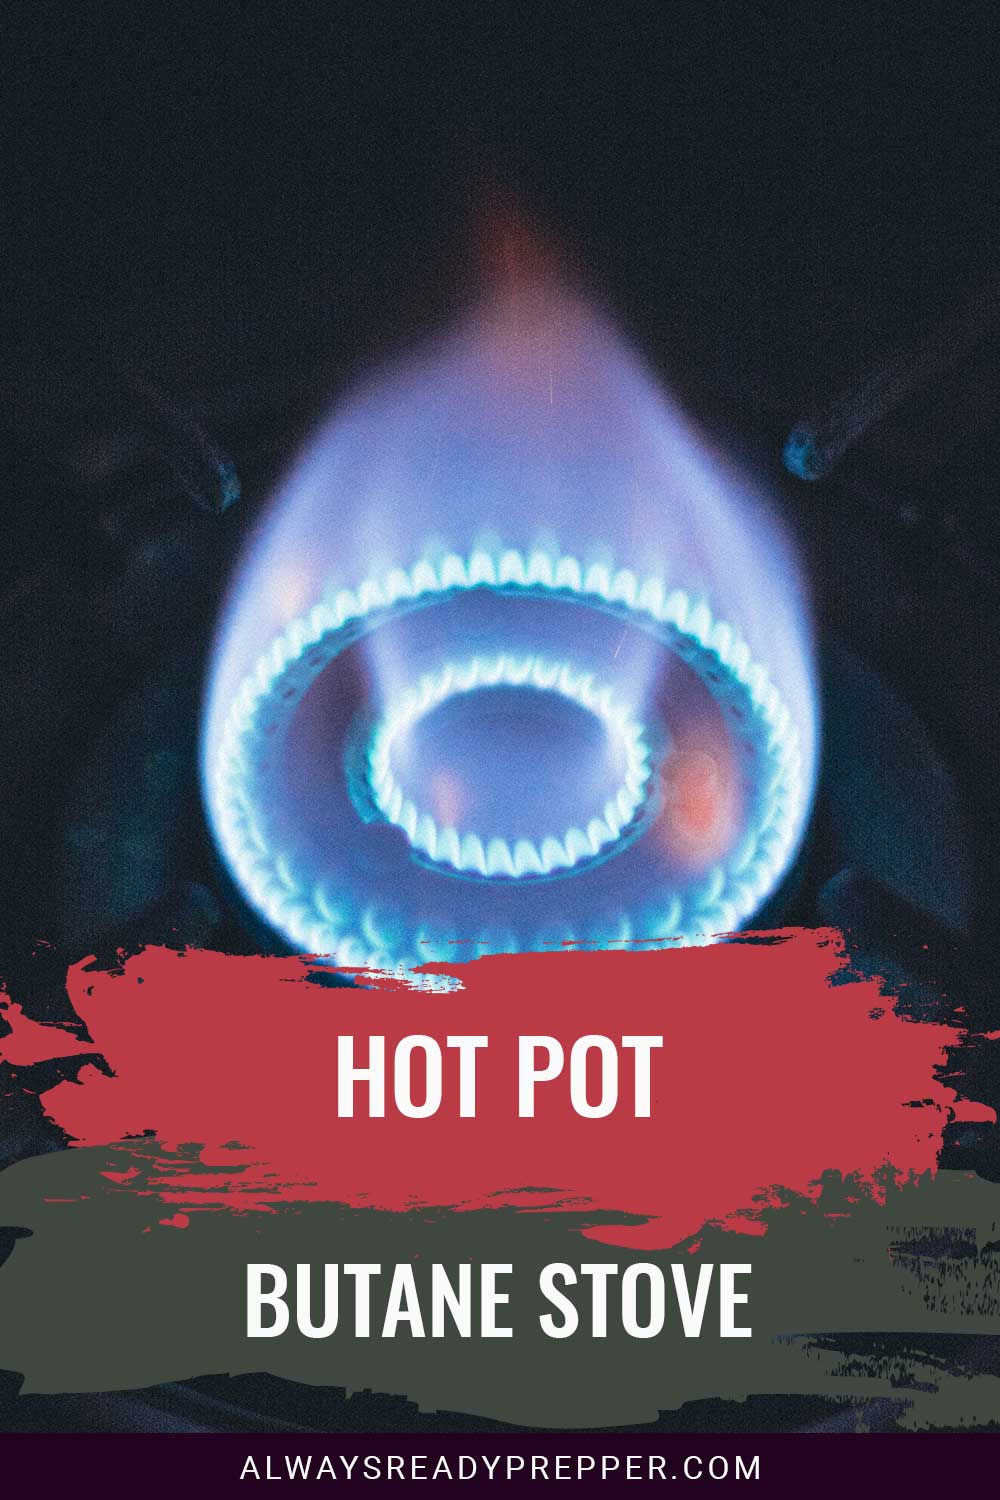 A stove burning - Hot Pot Butane Stove